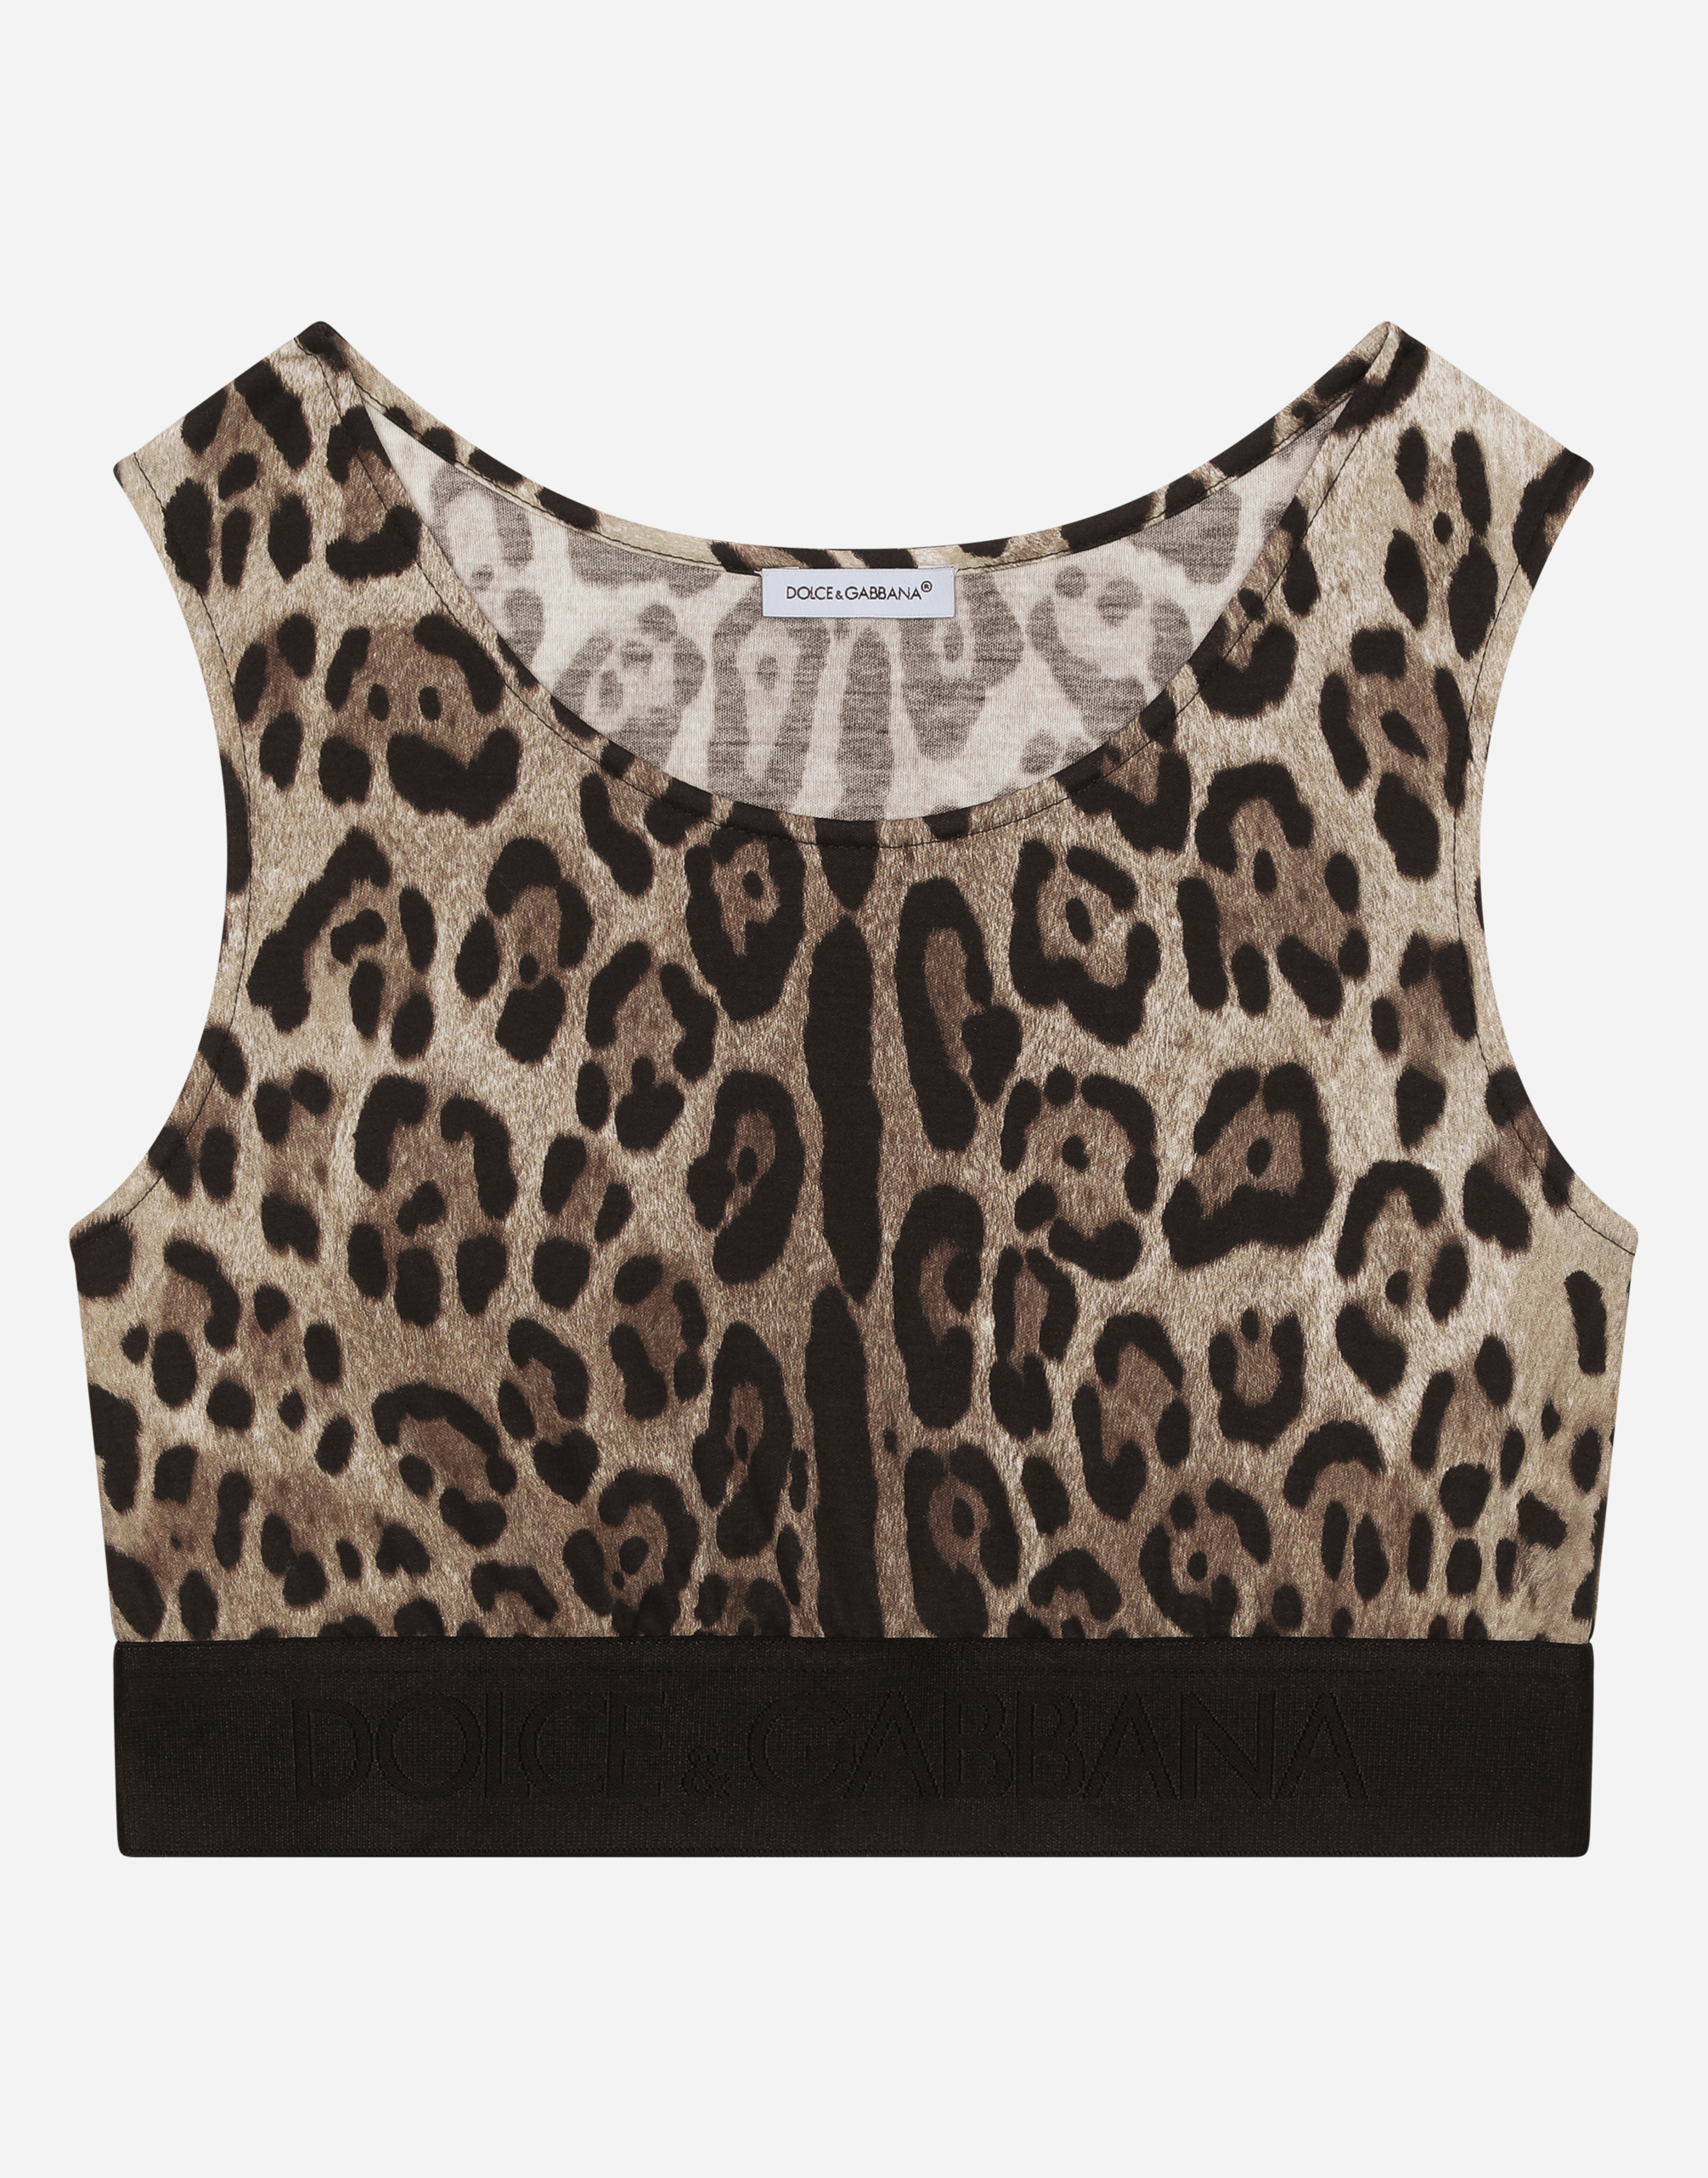 Leopard-print interlock bralette top in Animal Print